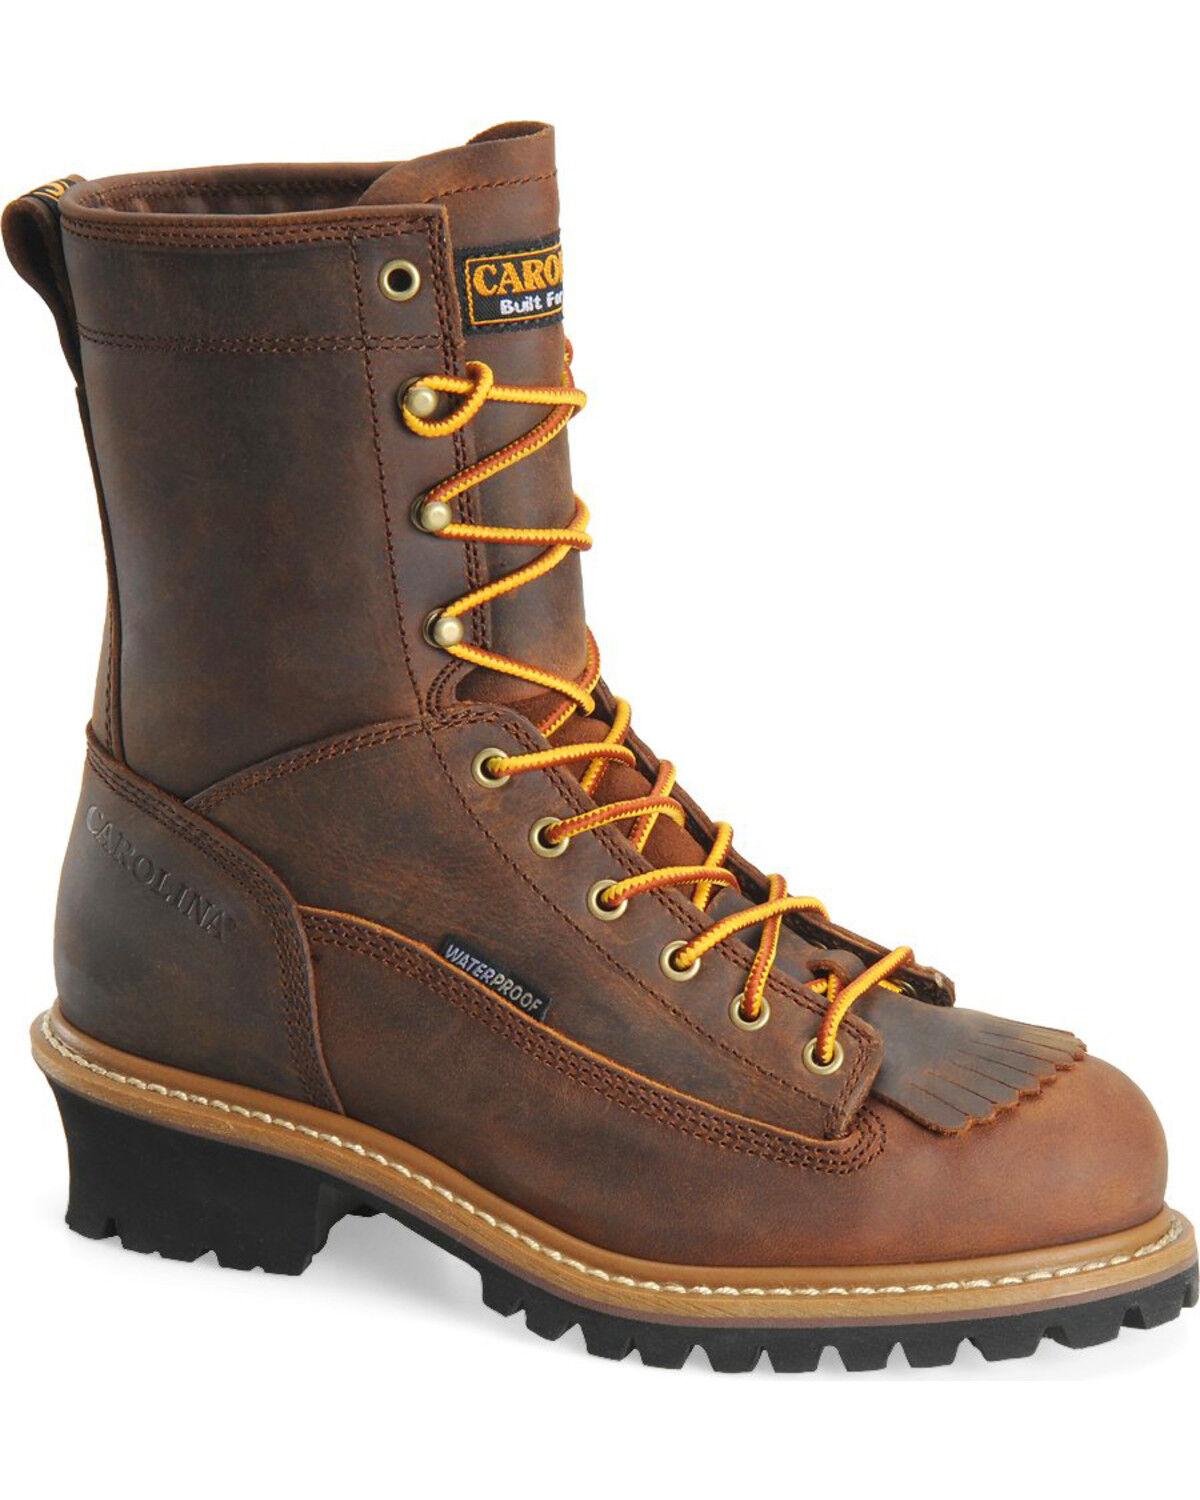 logging boots canada